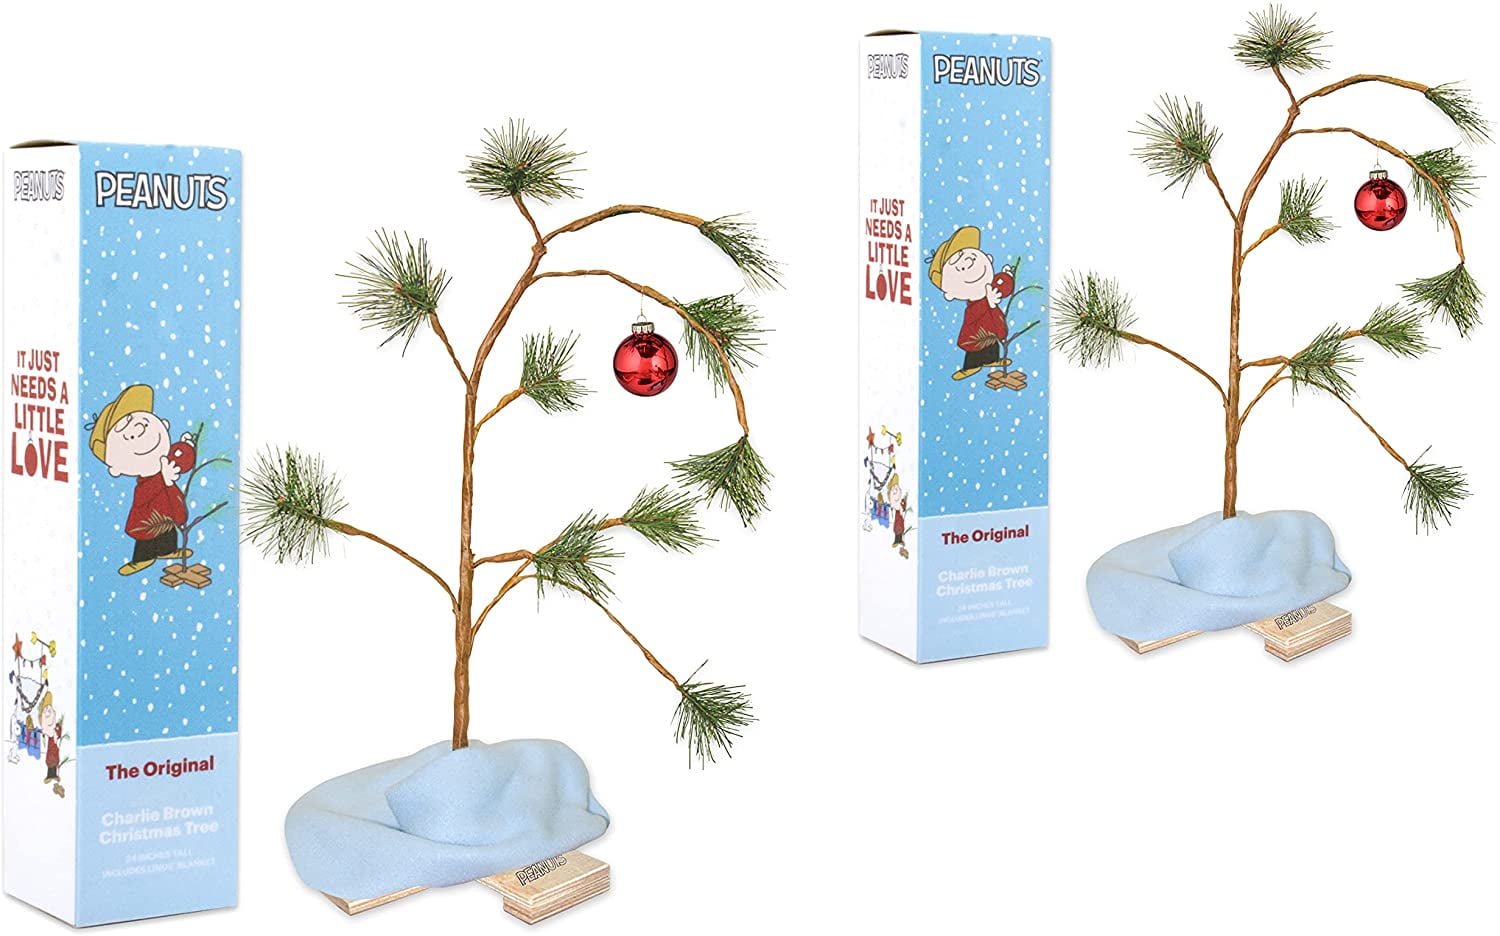 Charlie Brown Christmas Tree Musical Ornament Linus Blanket Plays Peanuts Theme 